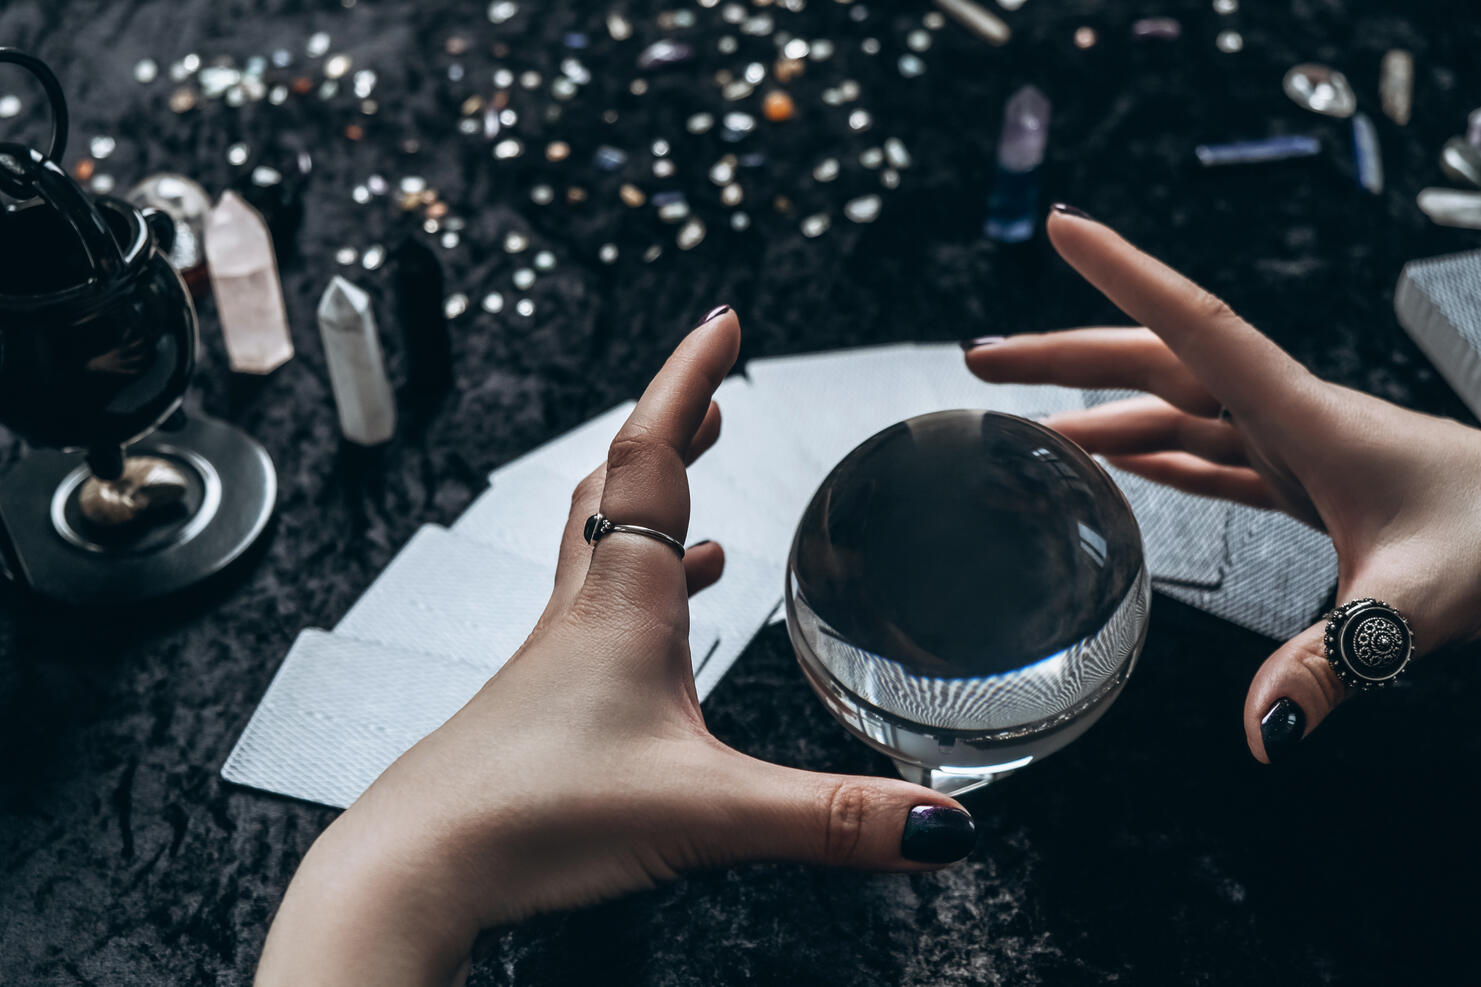 Women's hands conjure around a transparent sphere